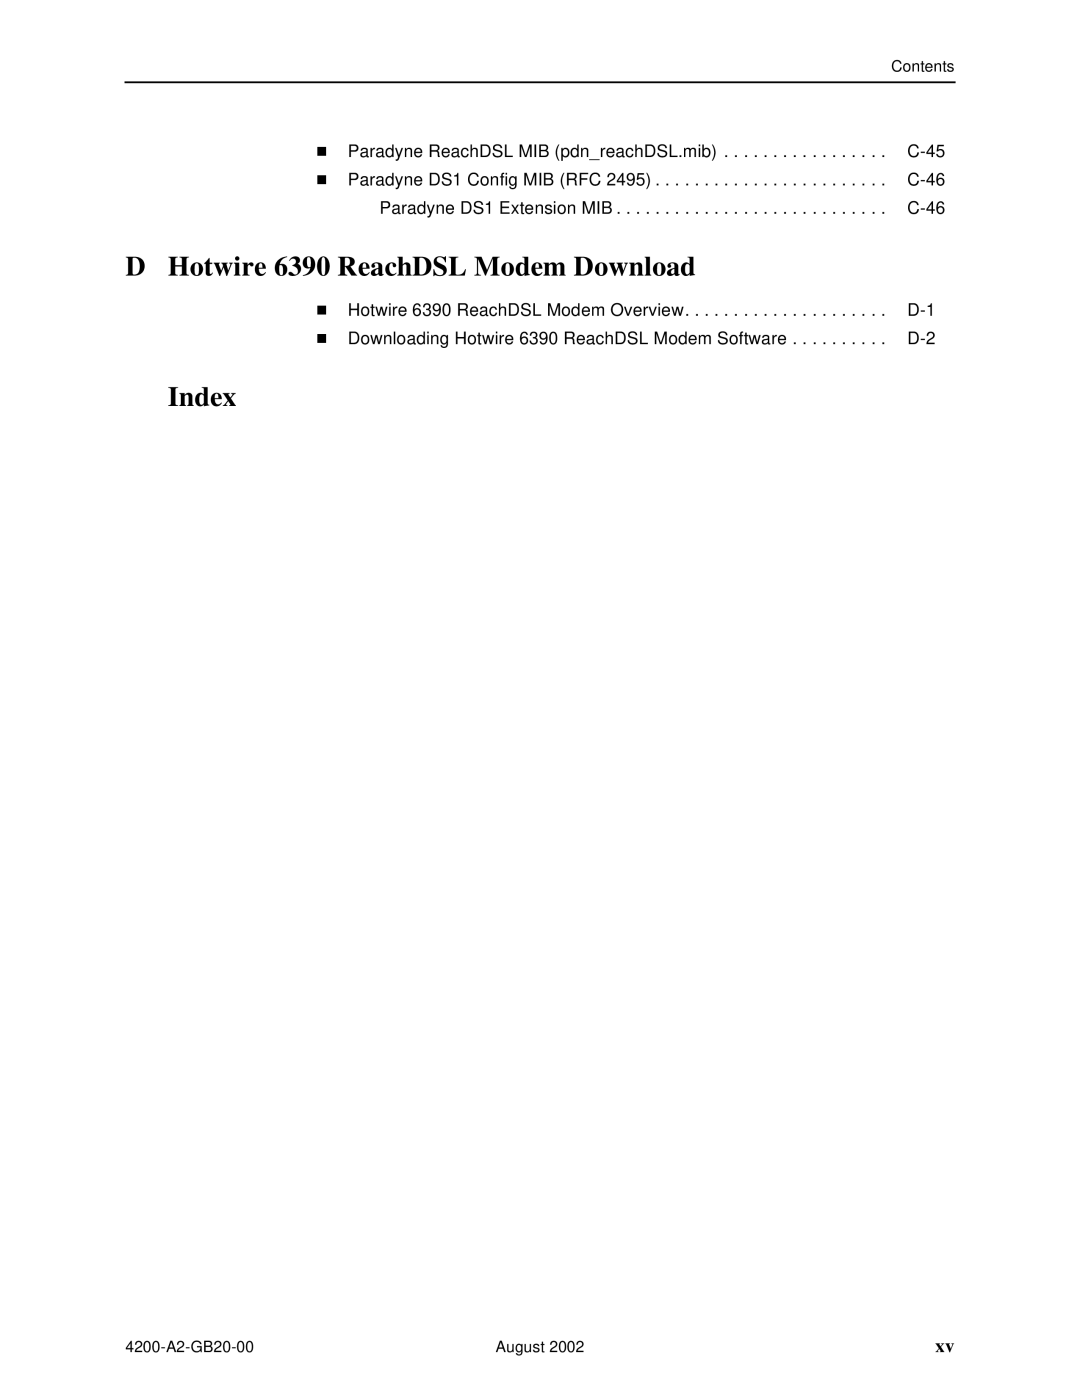 Paradyne 4200 manual D Hotwire 6390 ReachDSL Modem Download, Index 